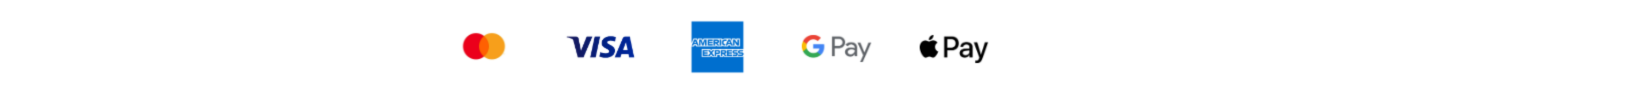 Payrix-payment-options